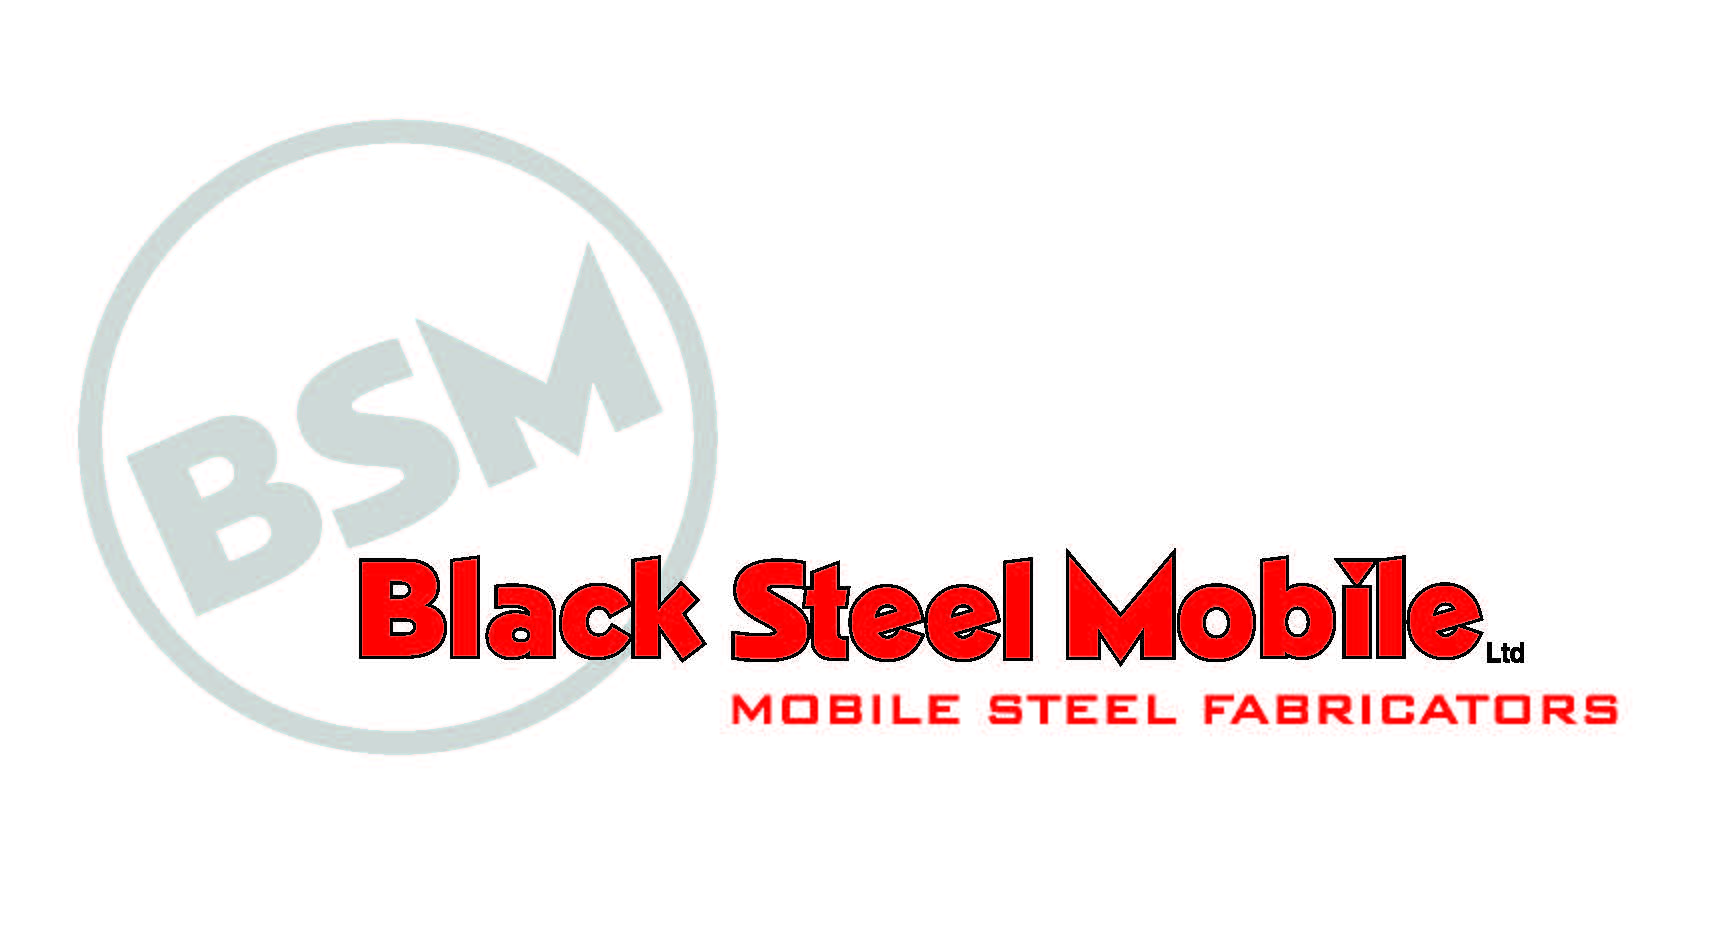 Black Steel Mobile Ltd